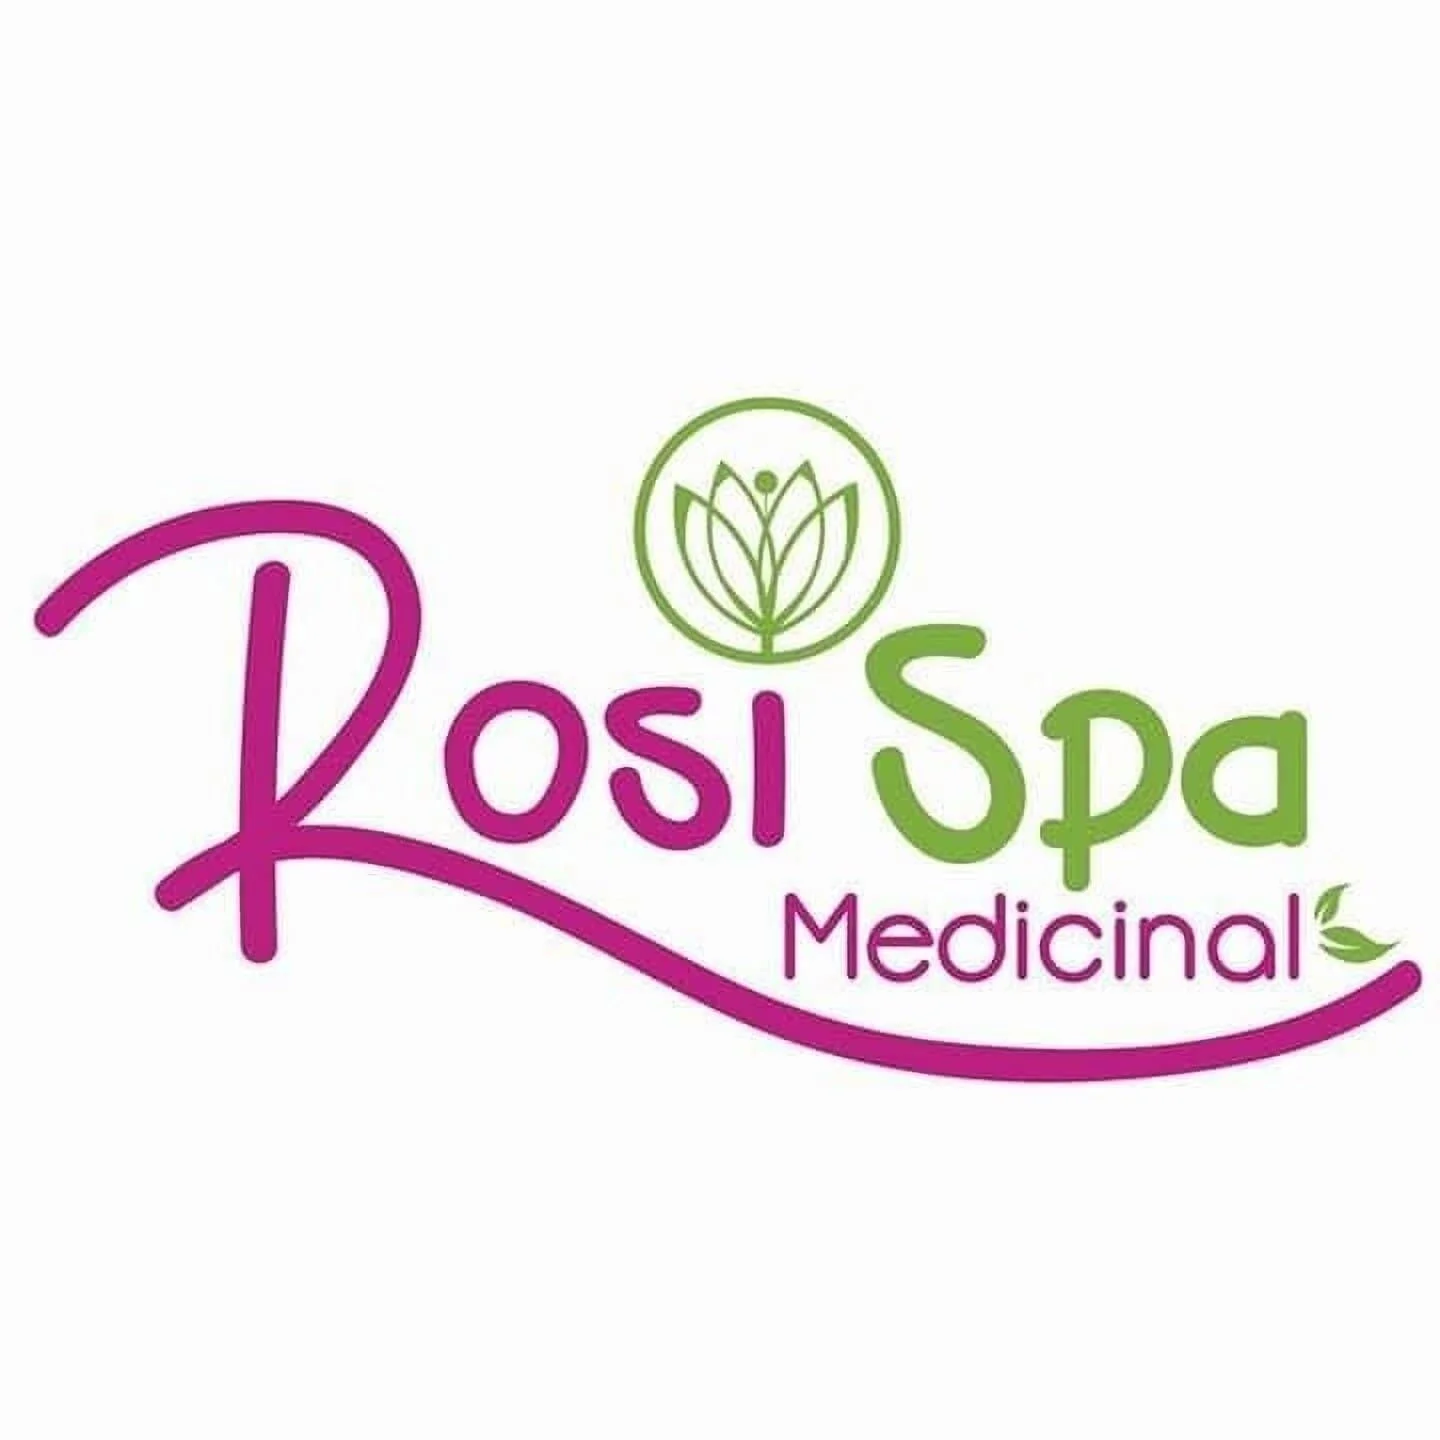 Spa-rosi-spa-medicinal-11016